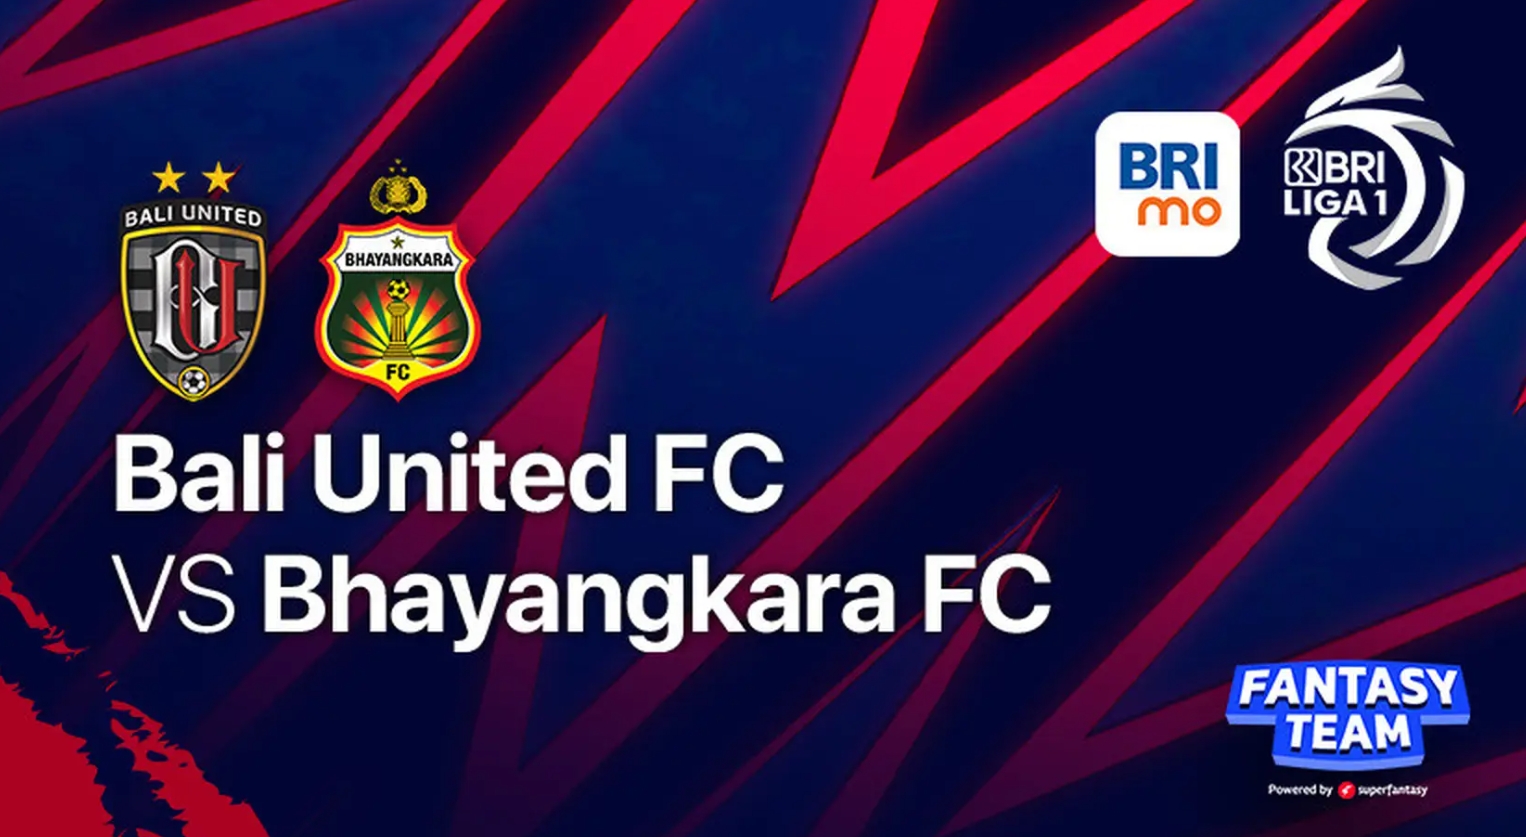 Stasiun TV Mana yang Siarkan Pertandingan BRI Liga 1 Bali United vs Bhayangkara FC Kamis 8 Desember 2022 Malam